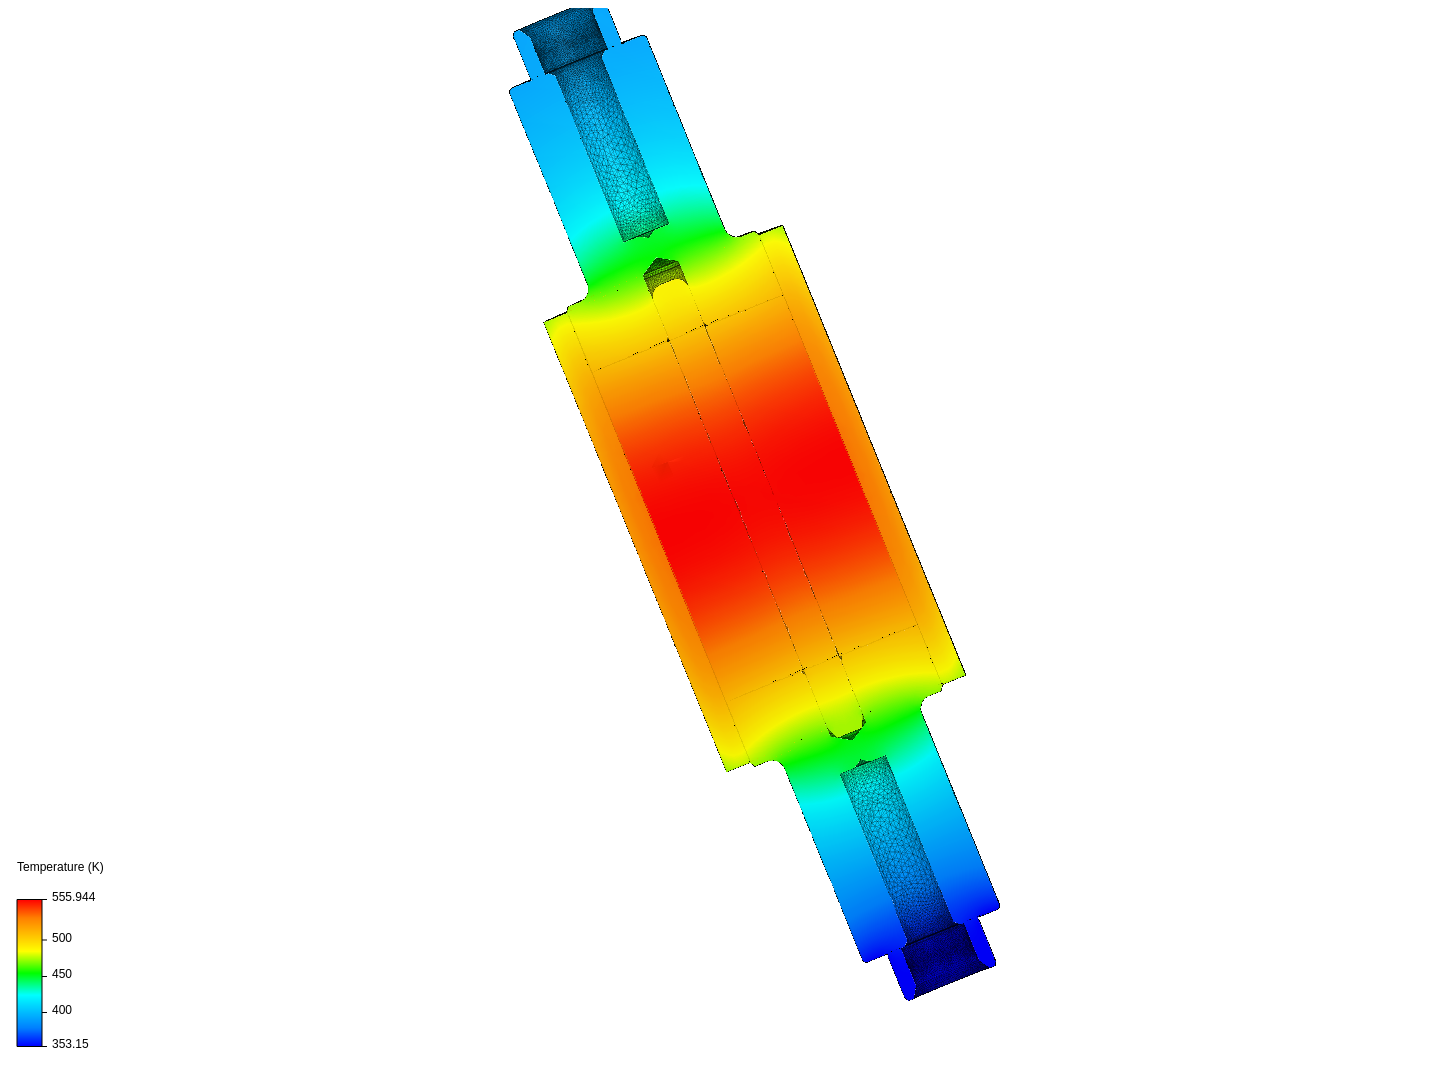 Baseline Rotor Thermal image